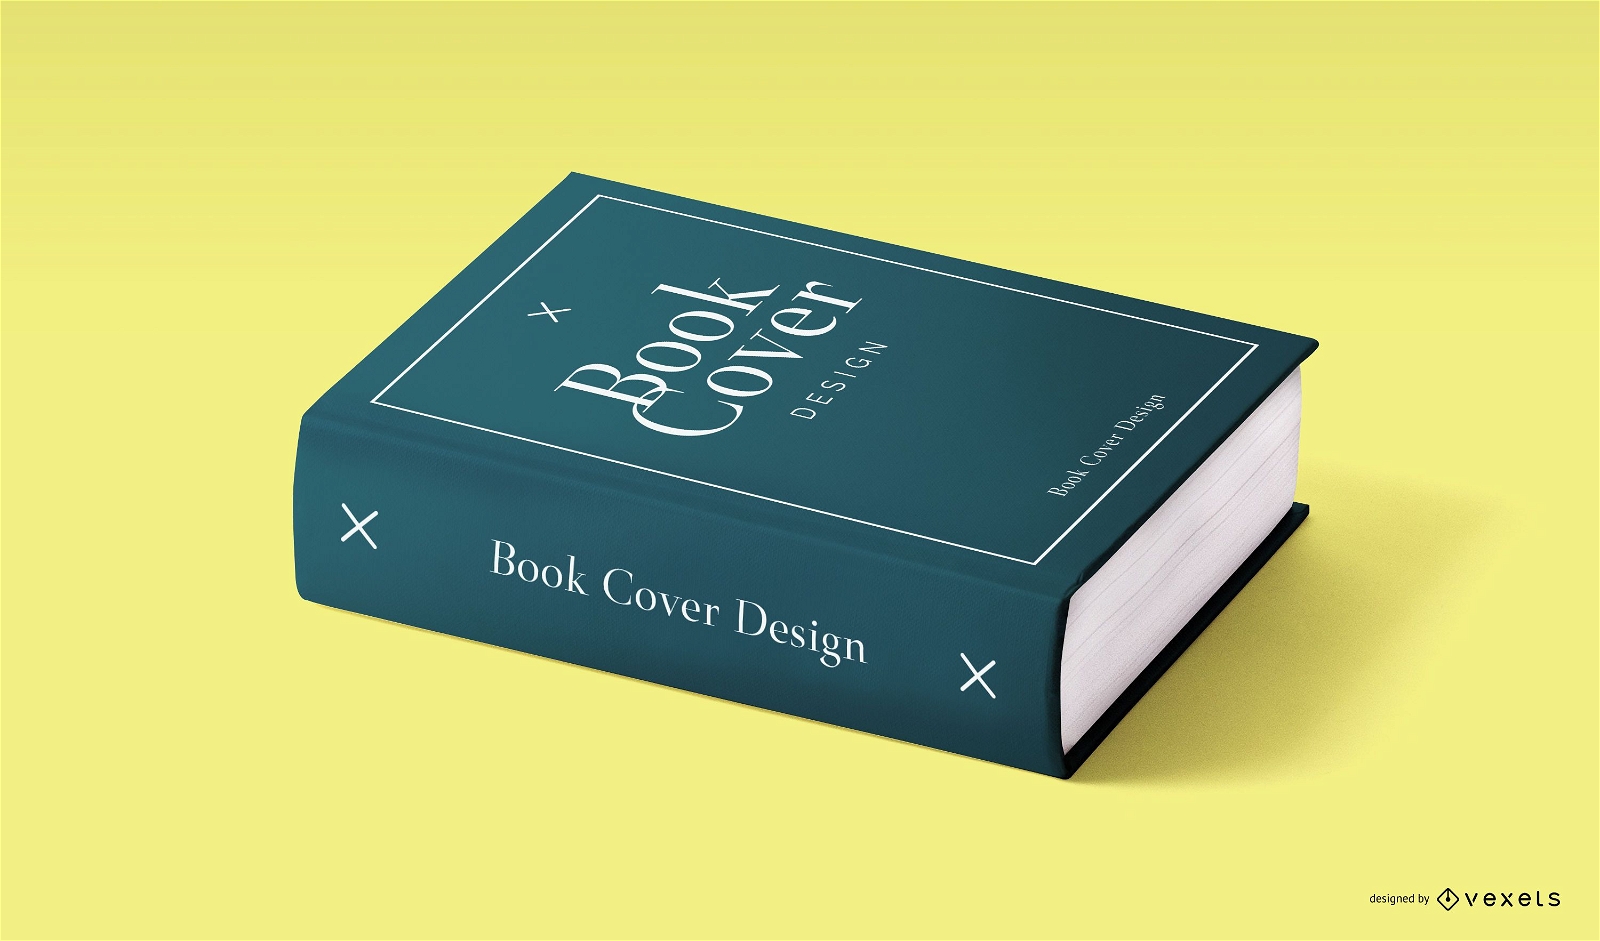 Book cover design mockup psd